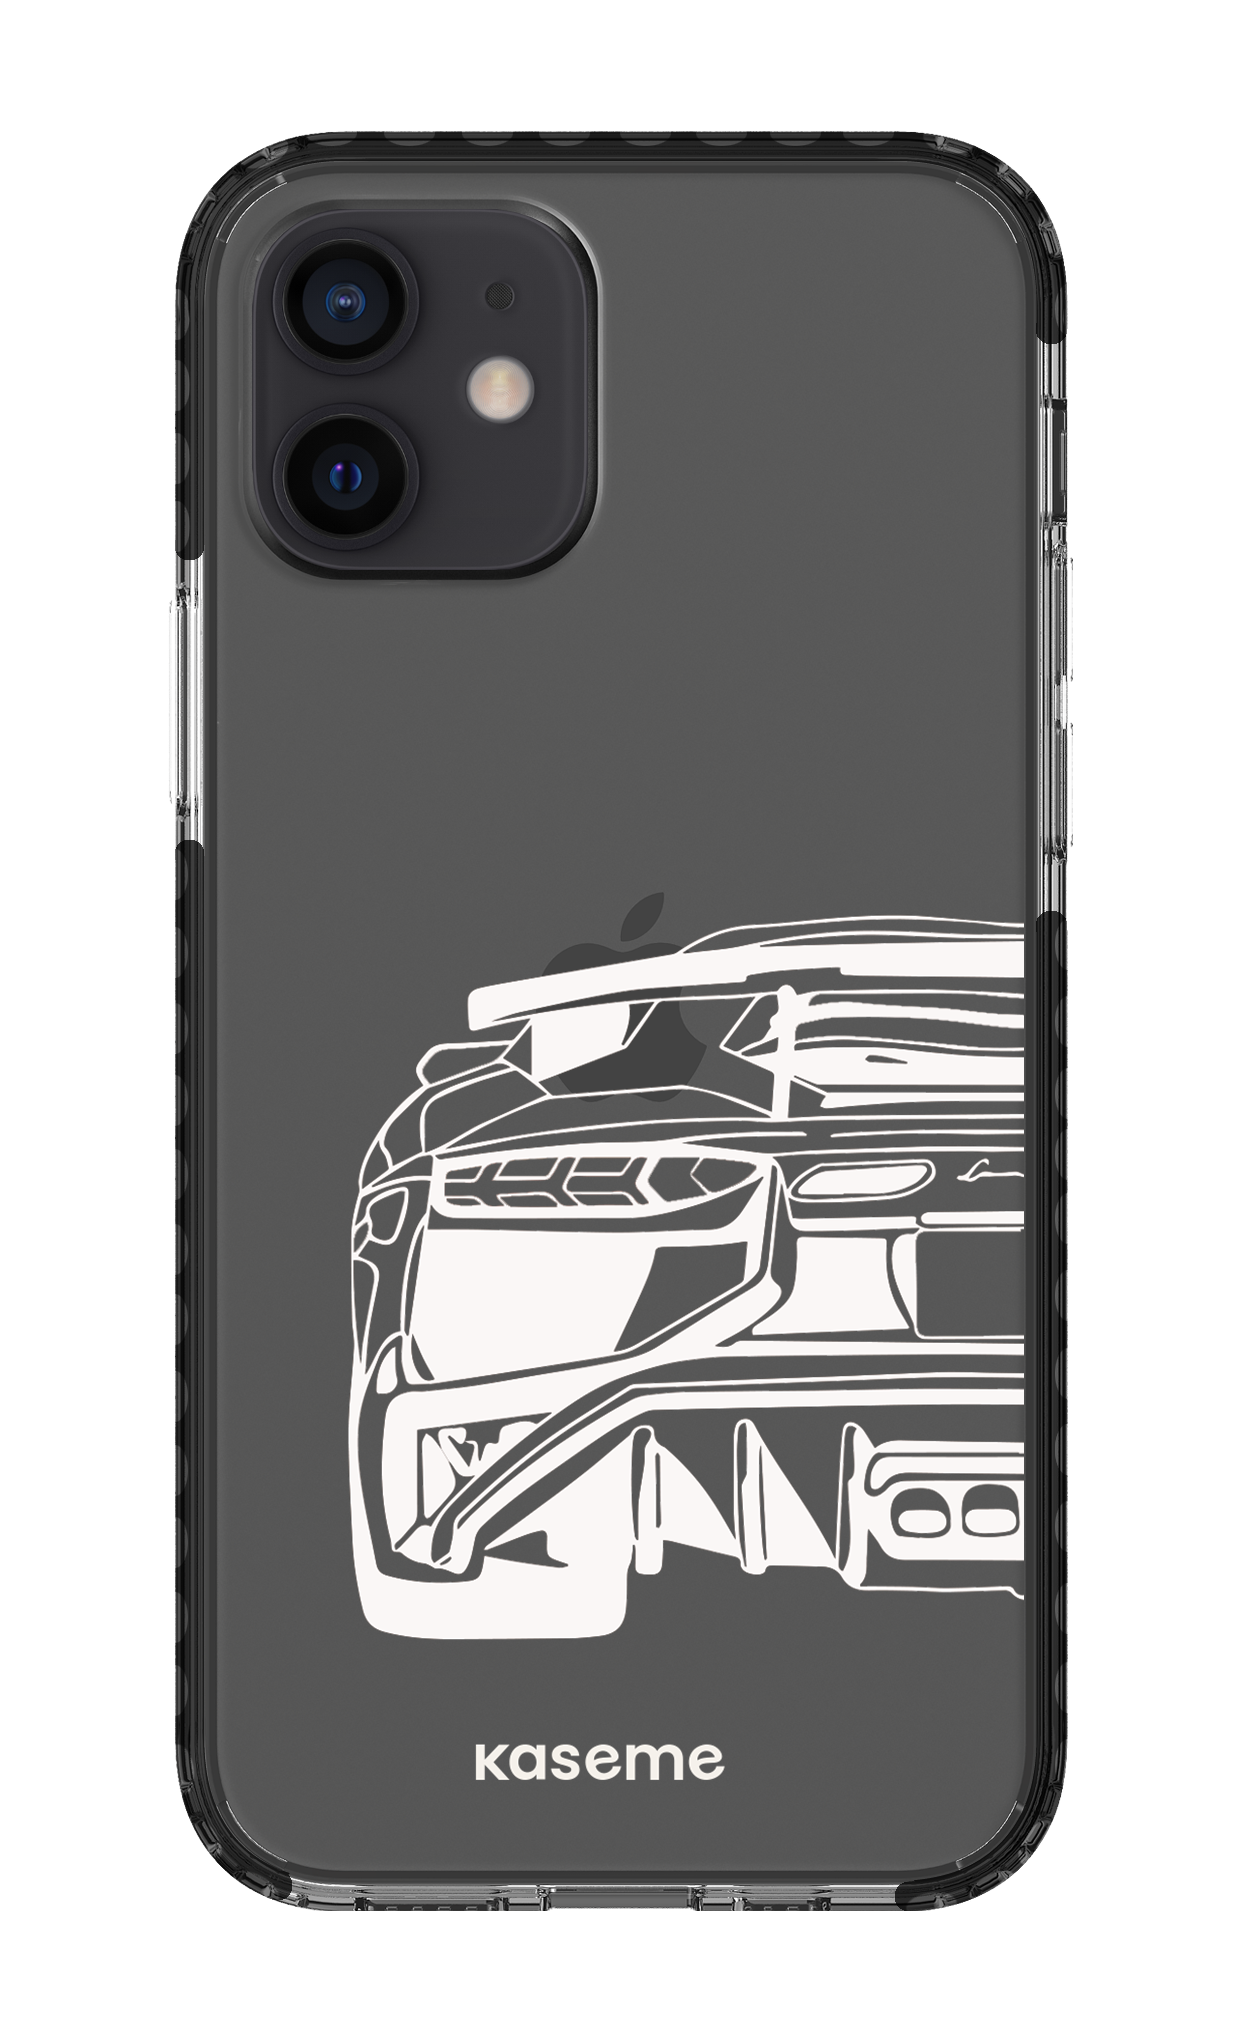 Lambo clear case - iPhone 12 Pro